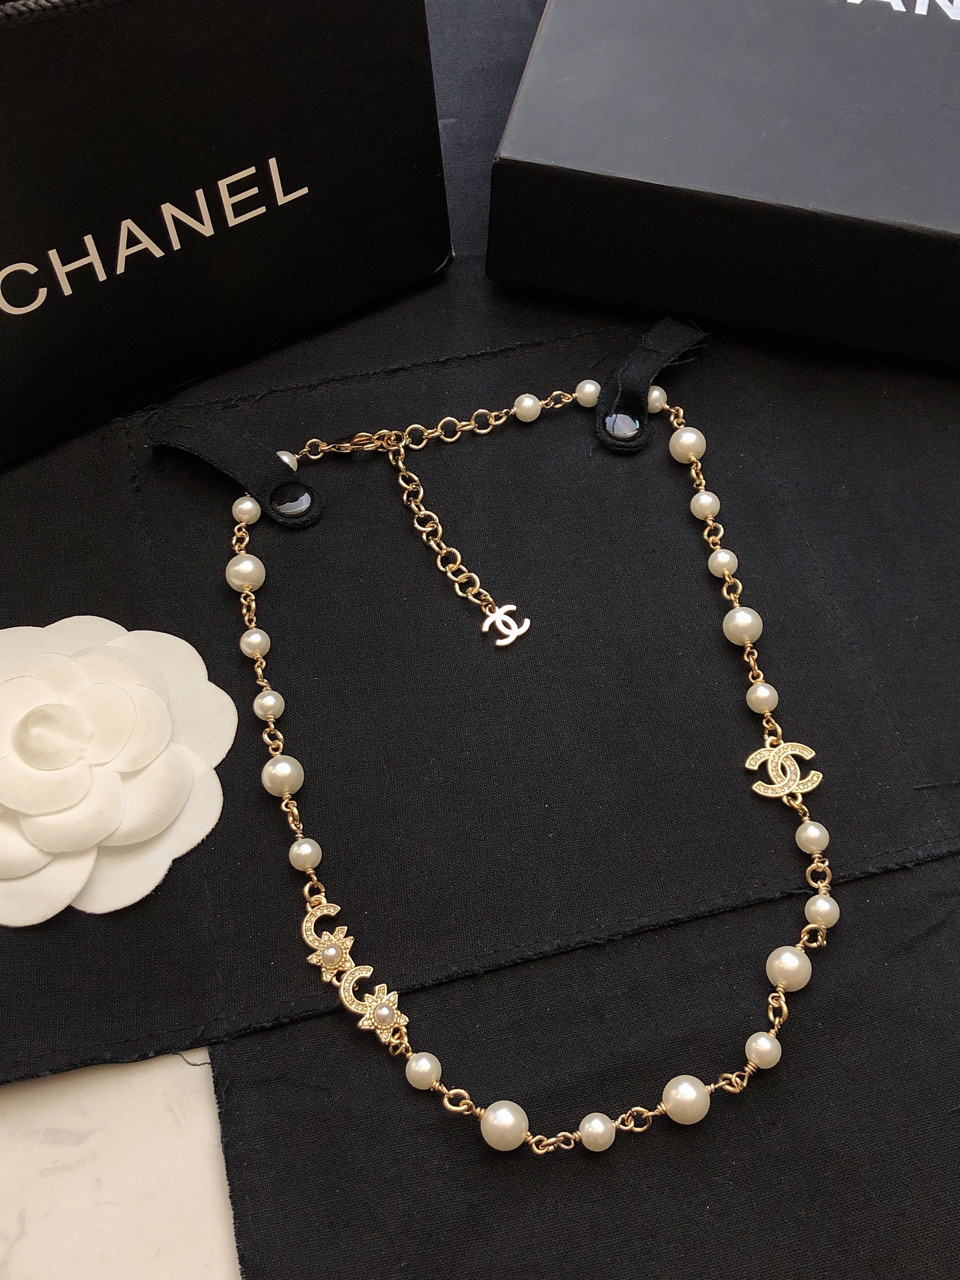 Chanel Jewelry Necklaces & Pendants Online Store